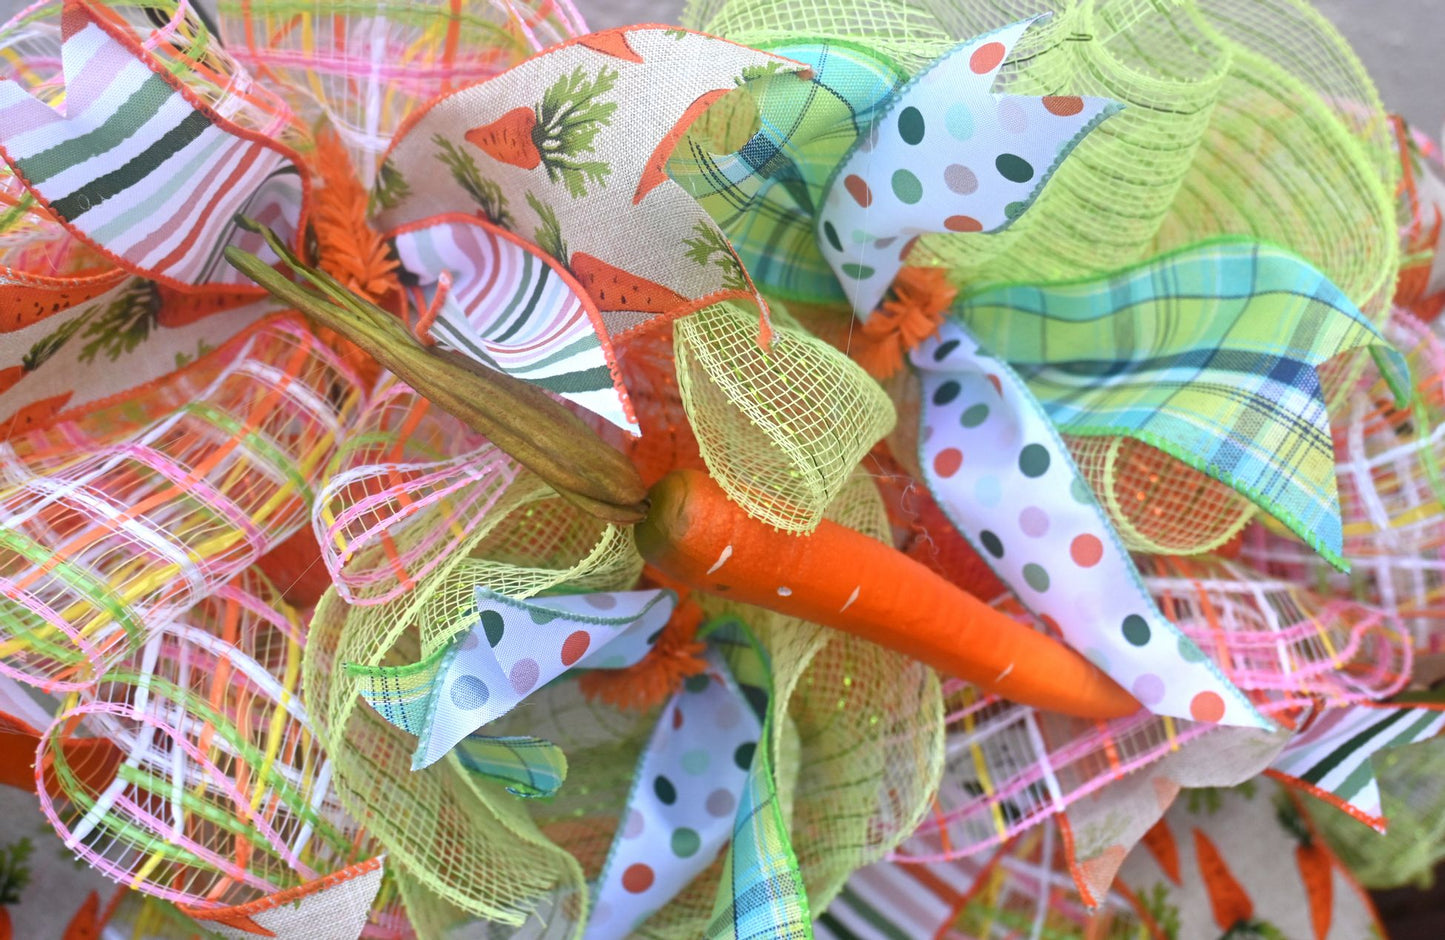 24" Carrot Wreath - Easter Carrot Wreath - Carrot Patch Wreath